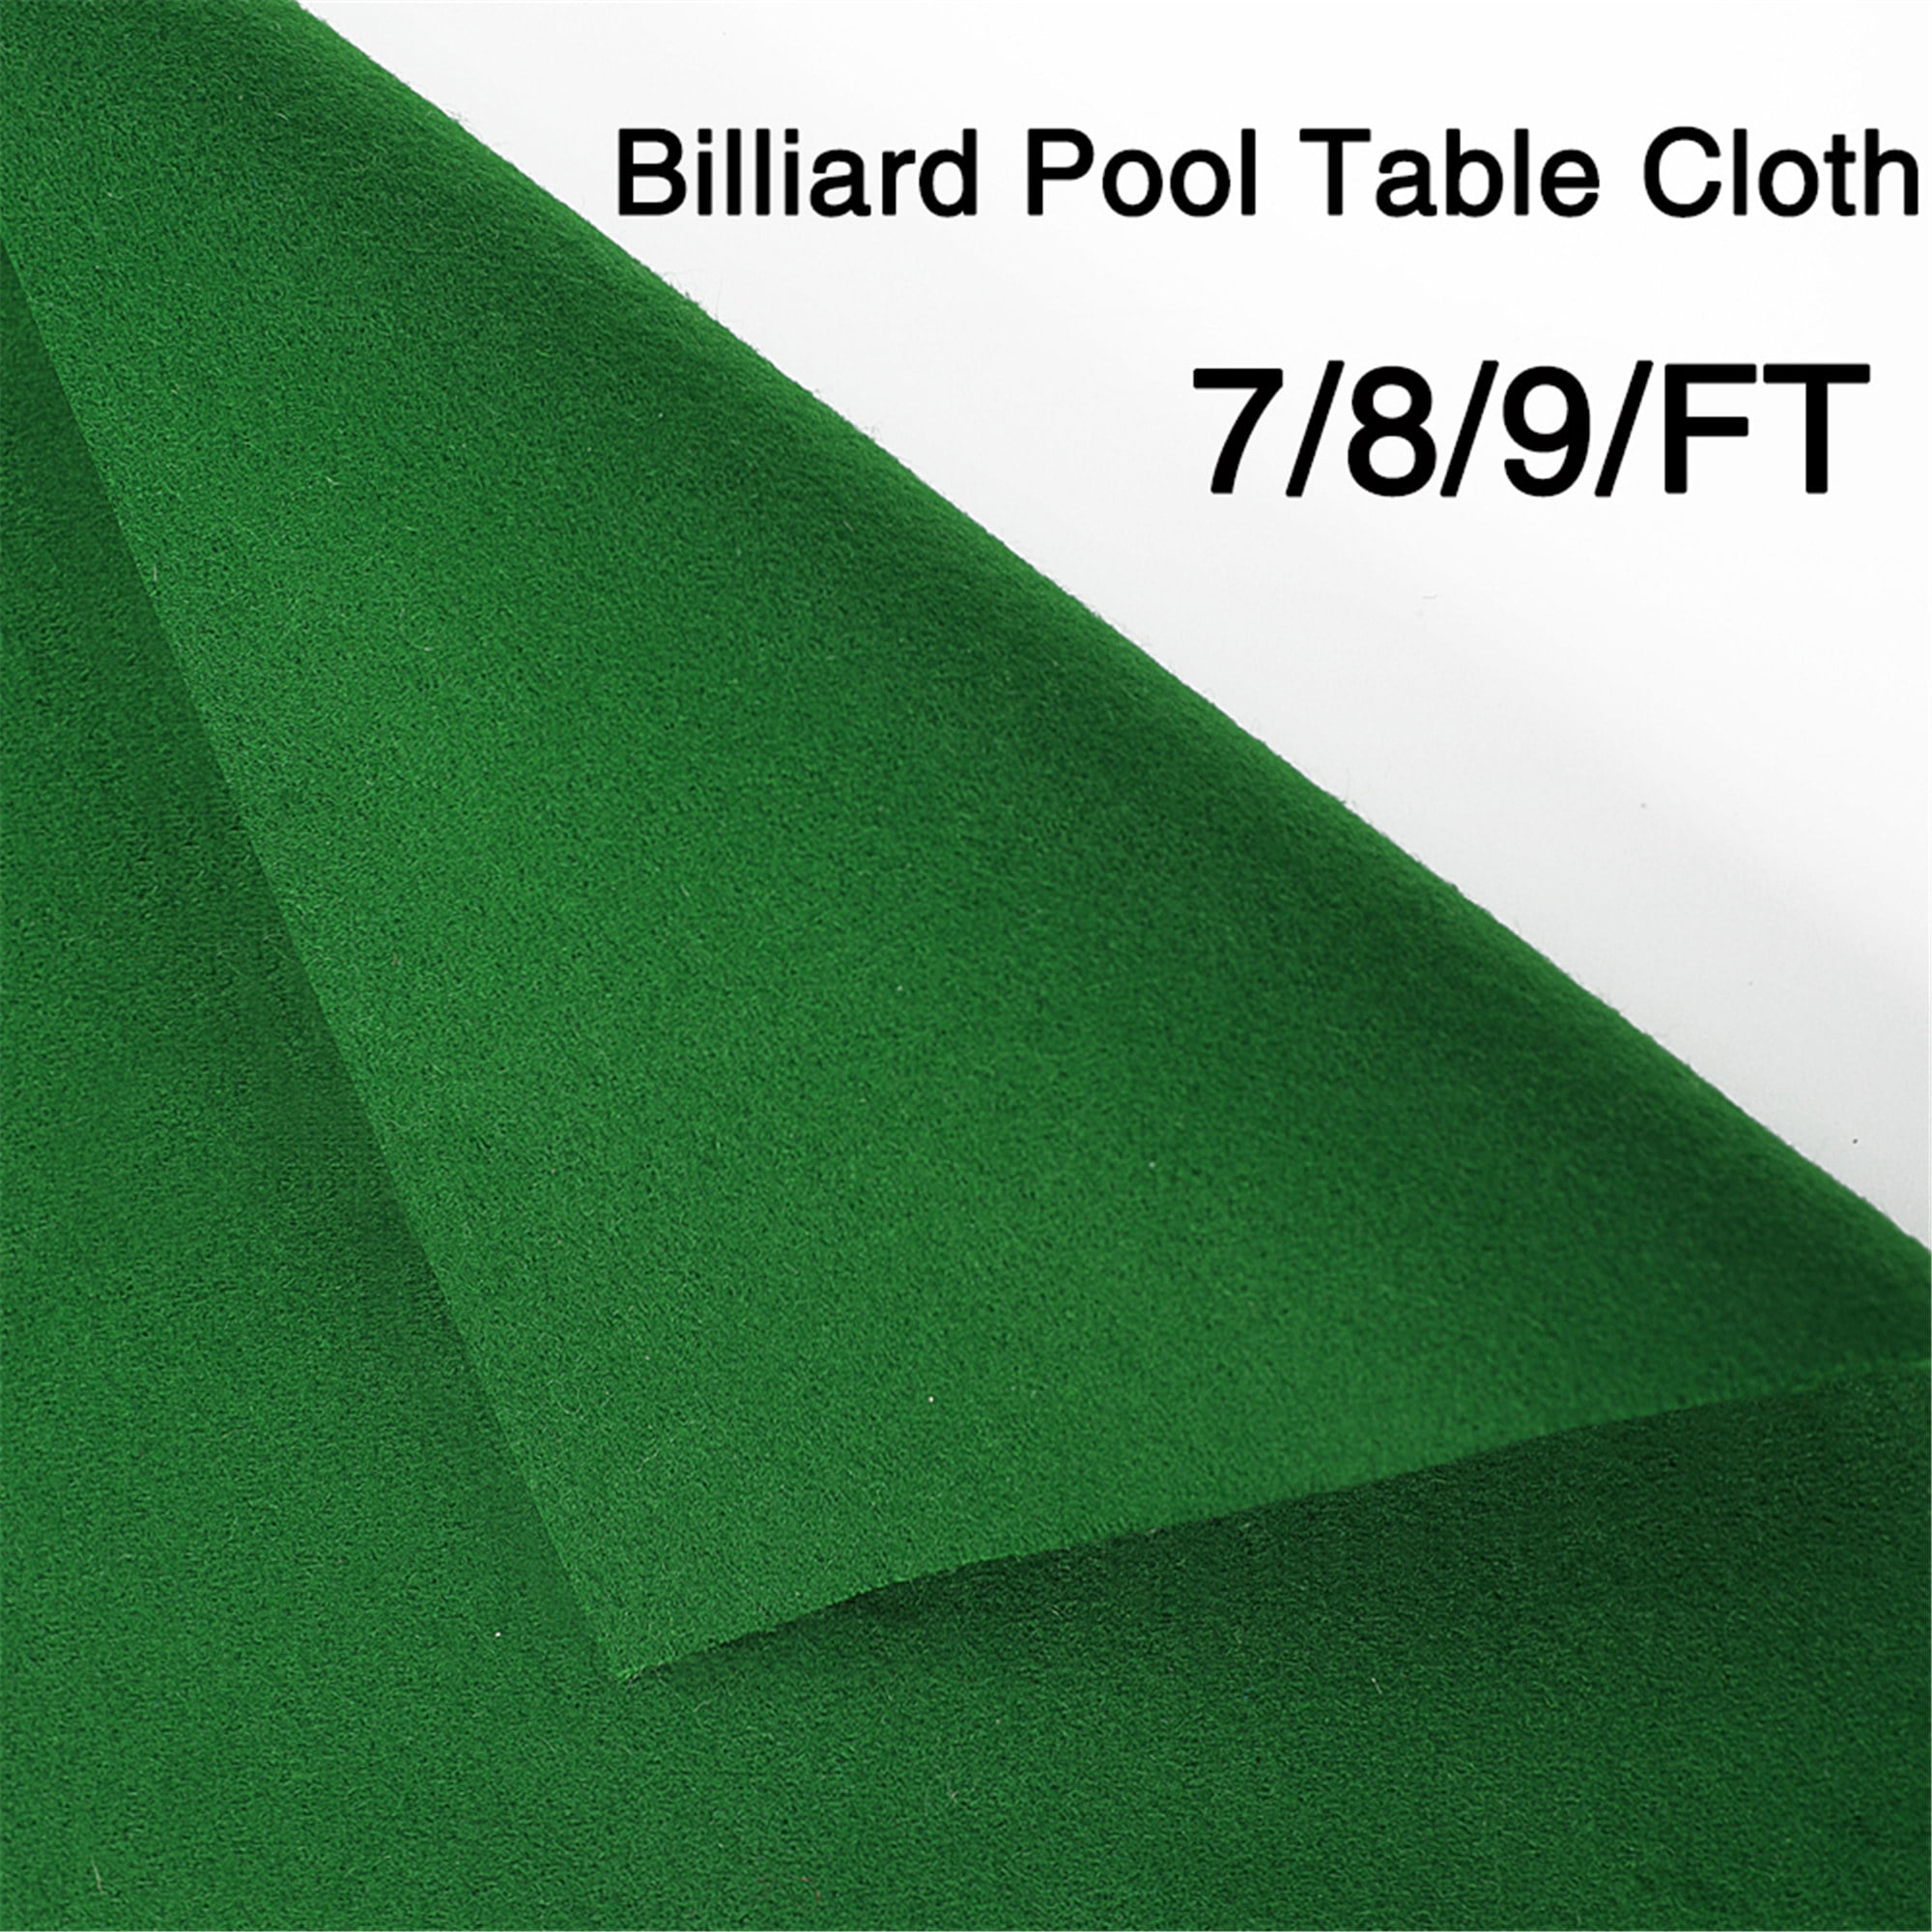 Worsted Wool+Nylon Billiard Pool Table Cloth Cover Felt For 7/8/9 FT Tabl 